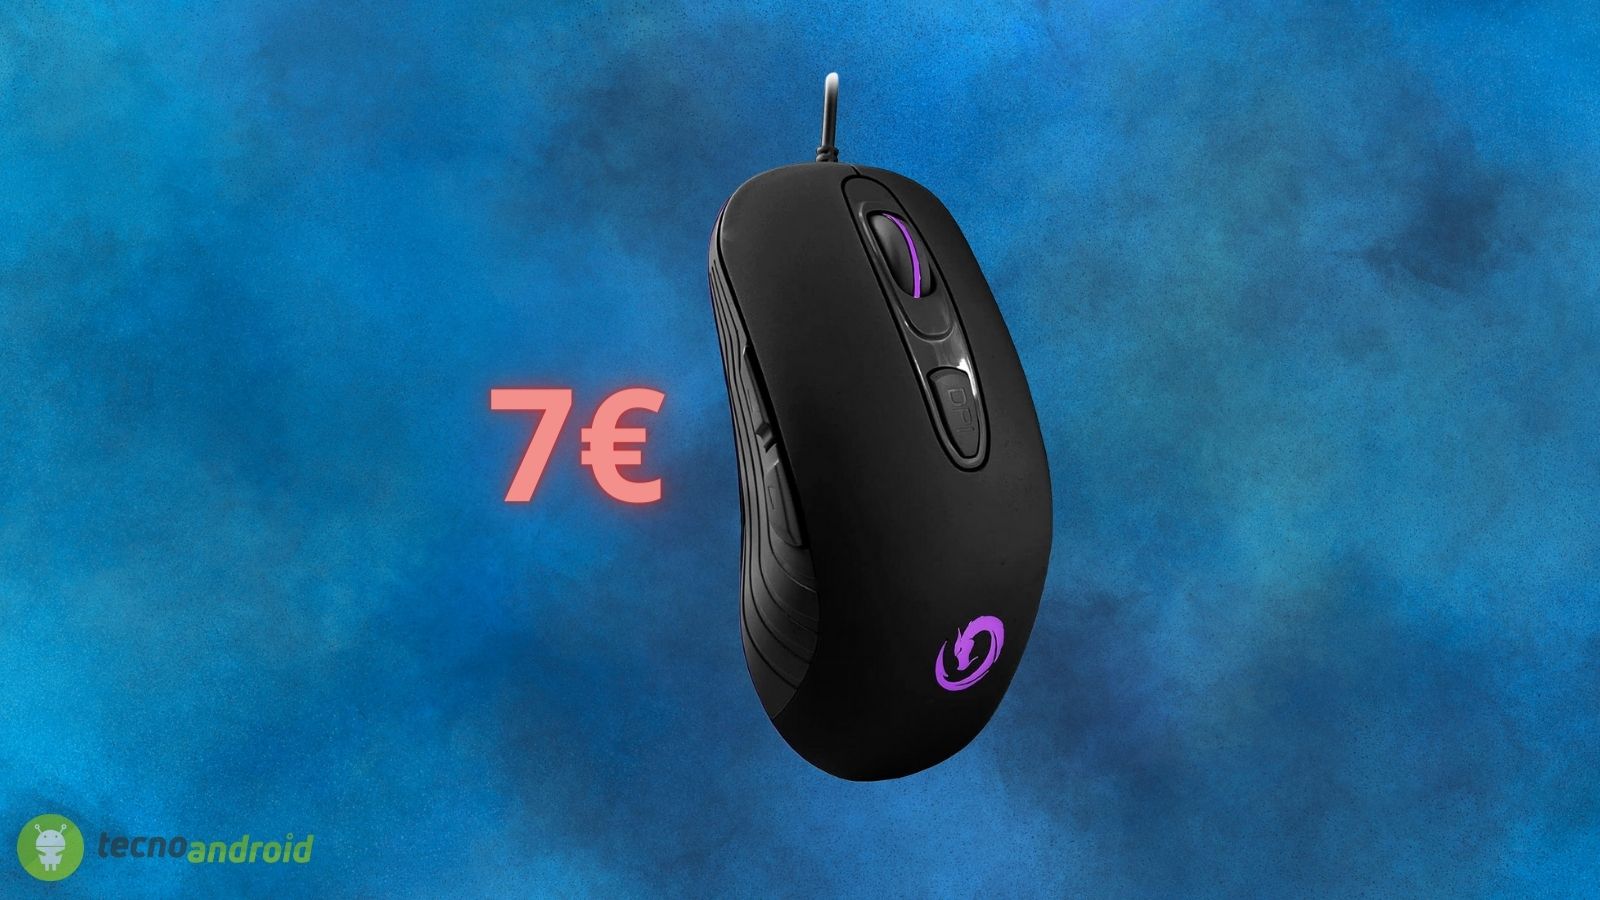 Mouse da GAMING in offerta FOLLE: costa solo 7€